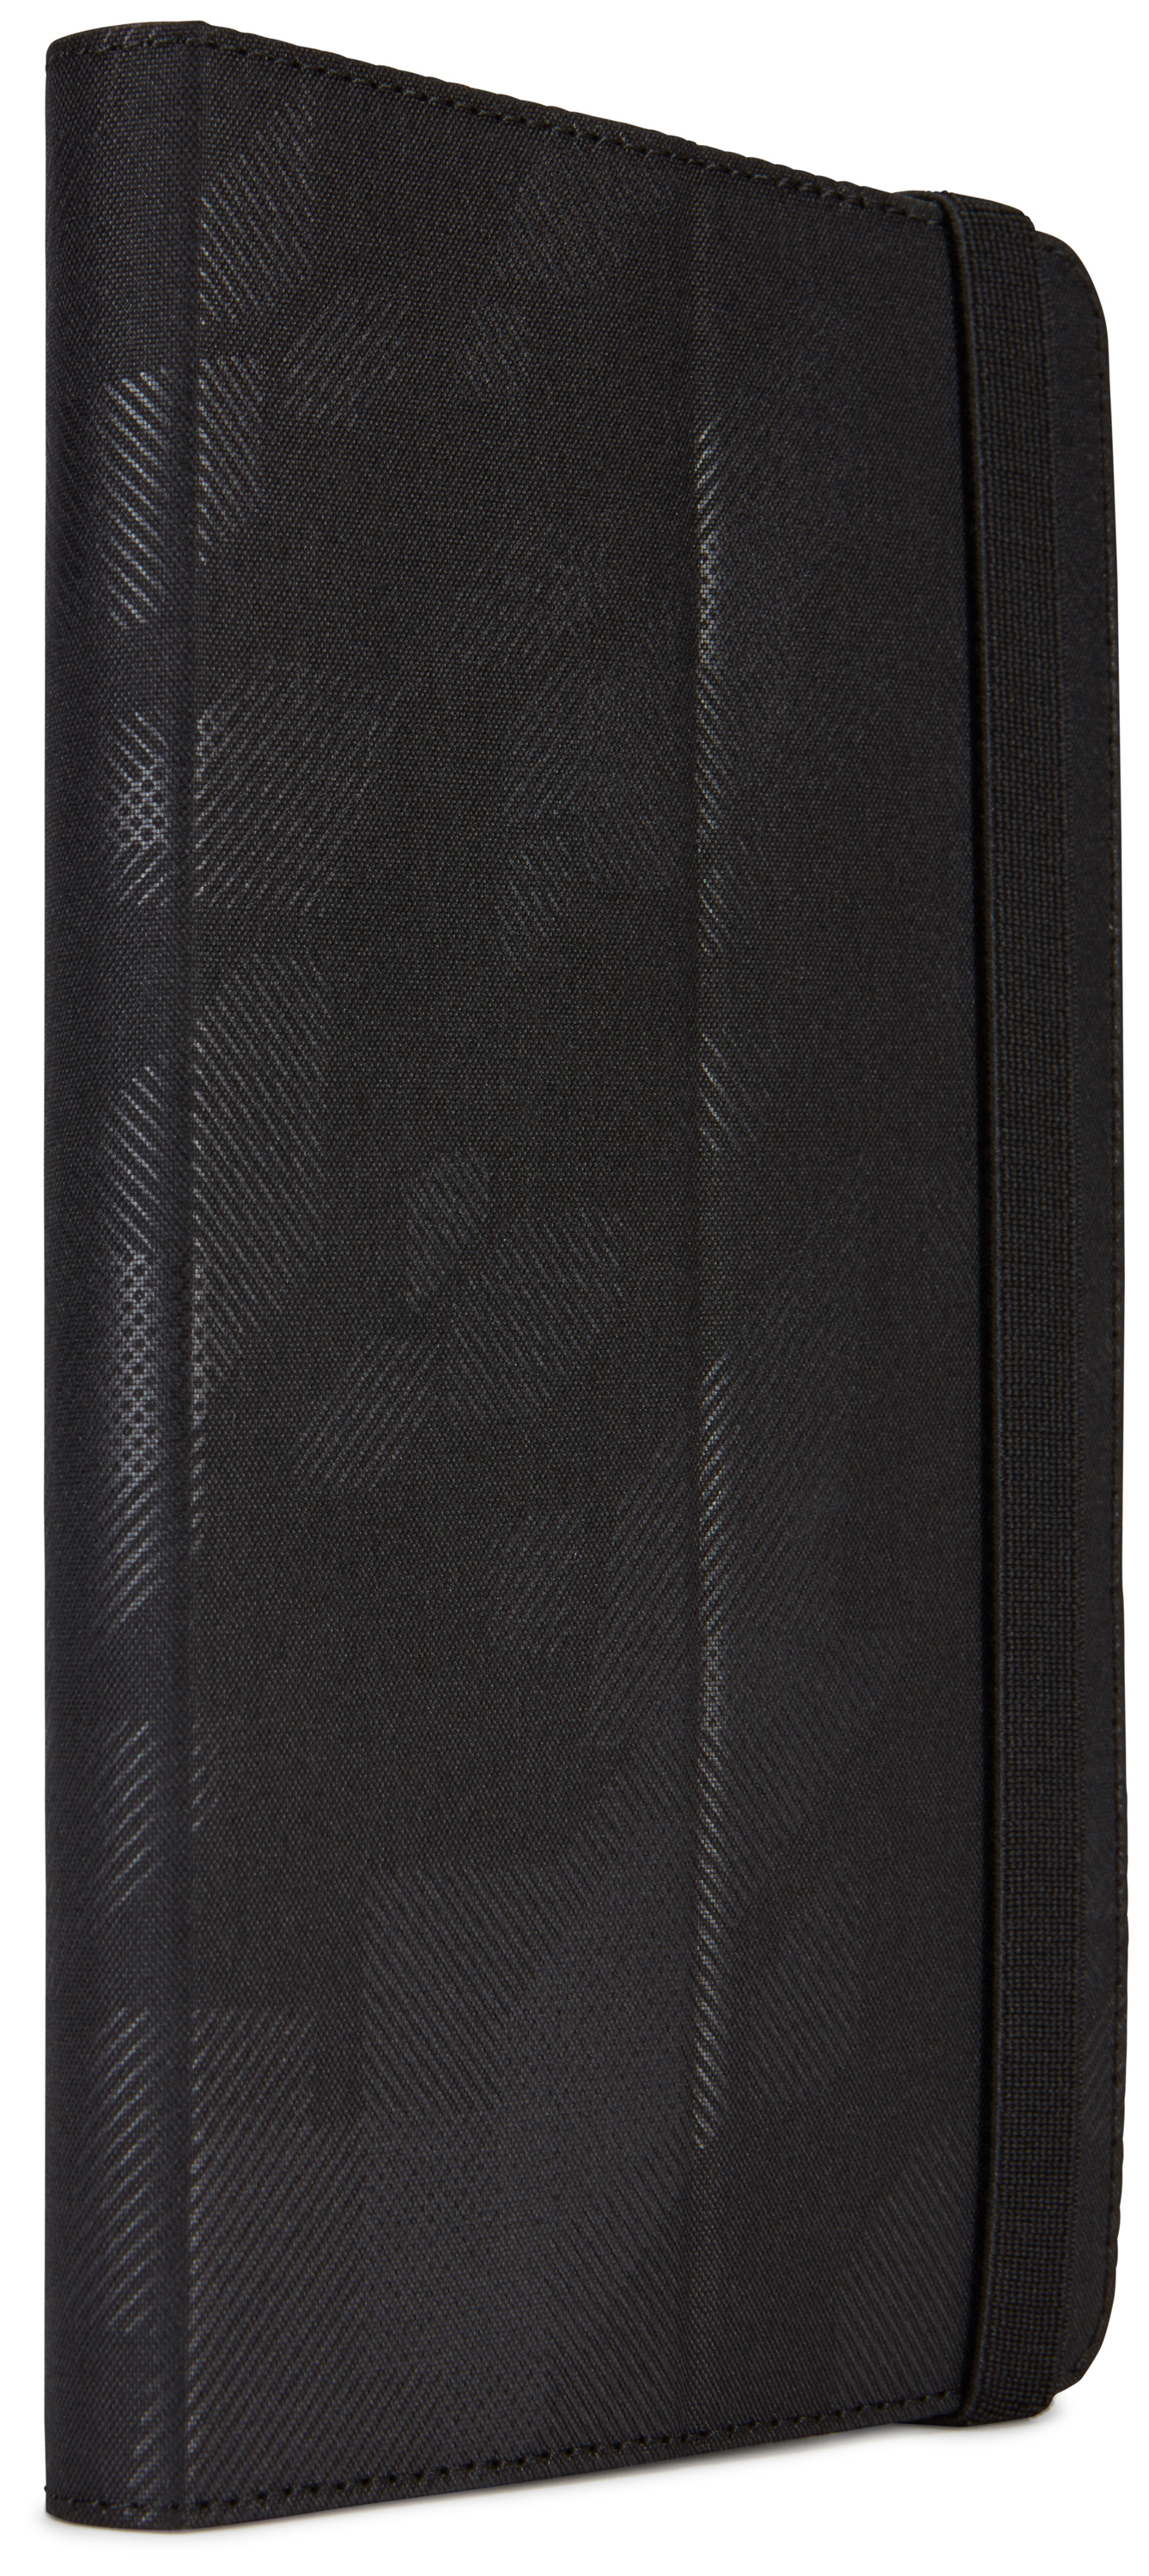 CASE-LOGIC Surefit Folio, Flip Schwarz Universal, Universal, Cover